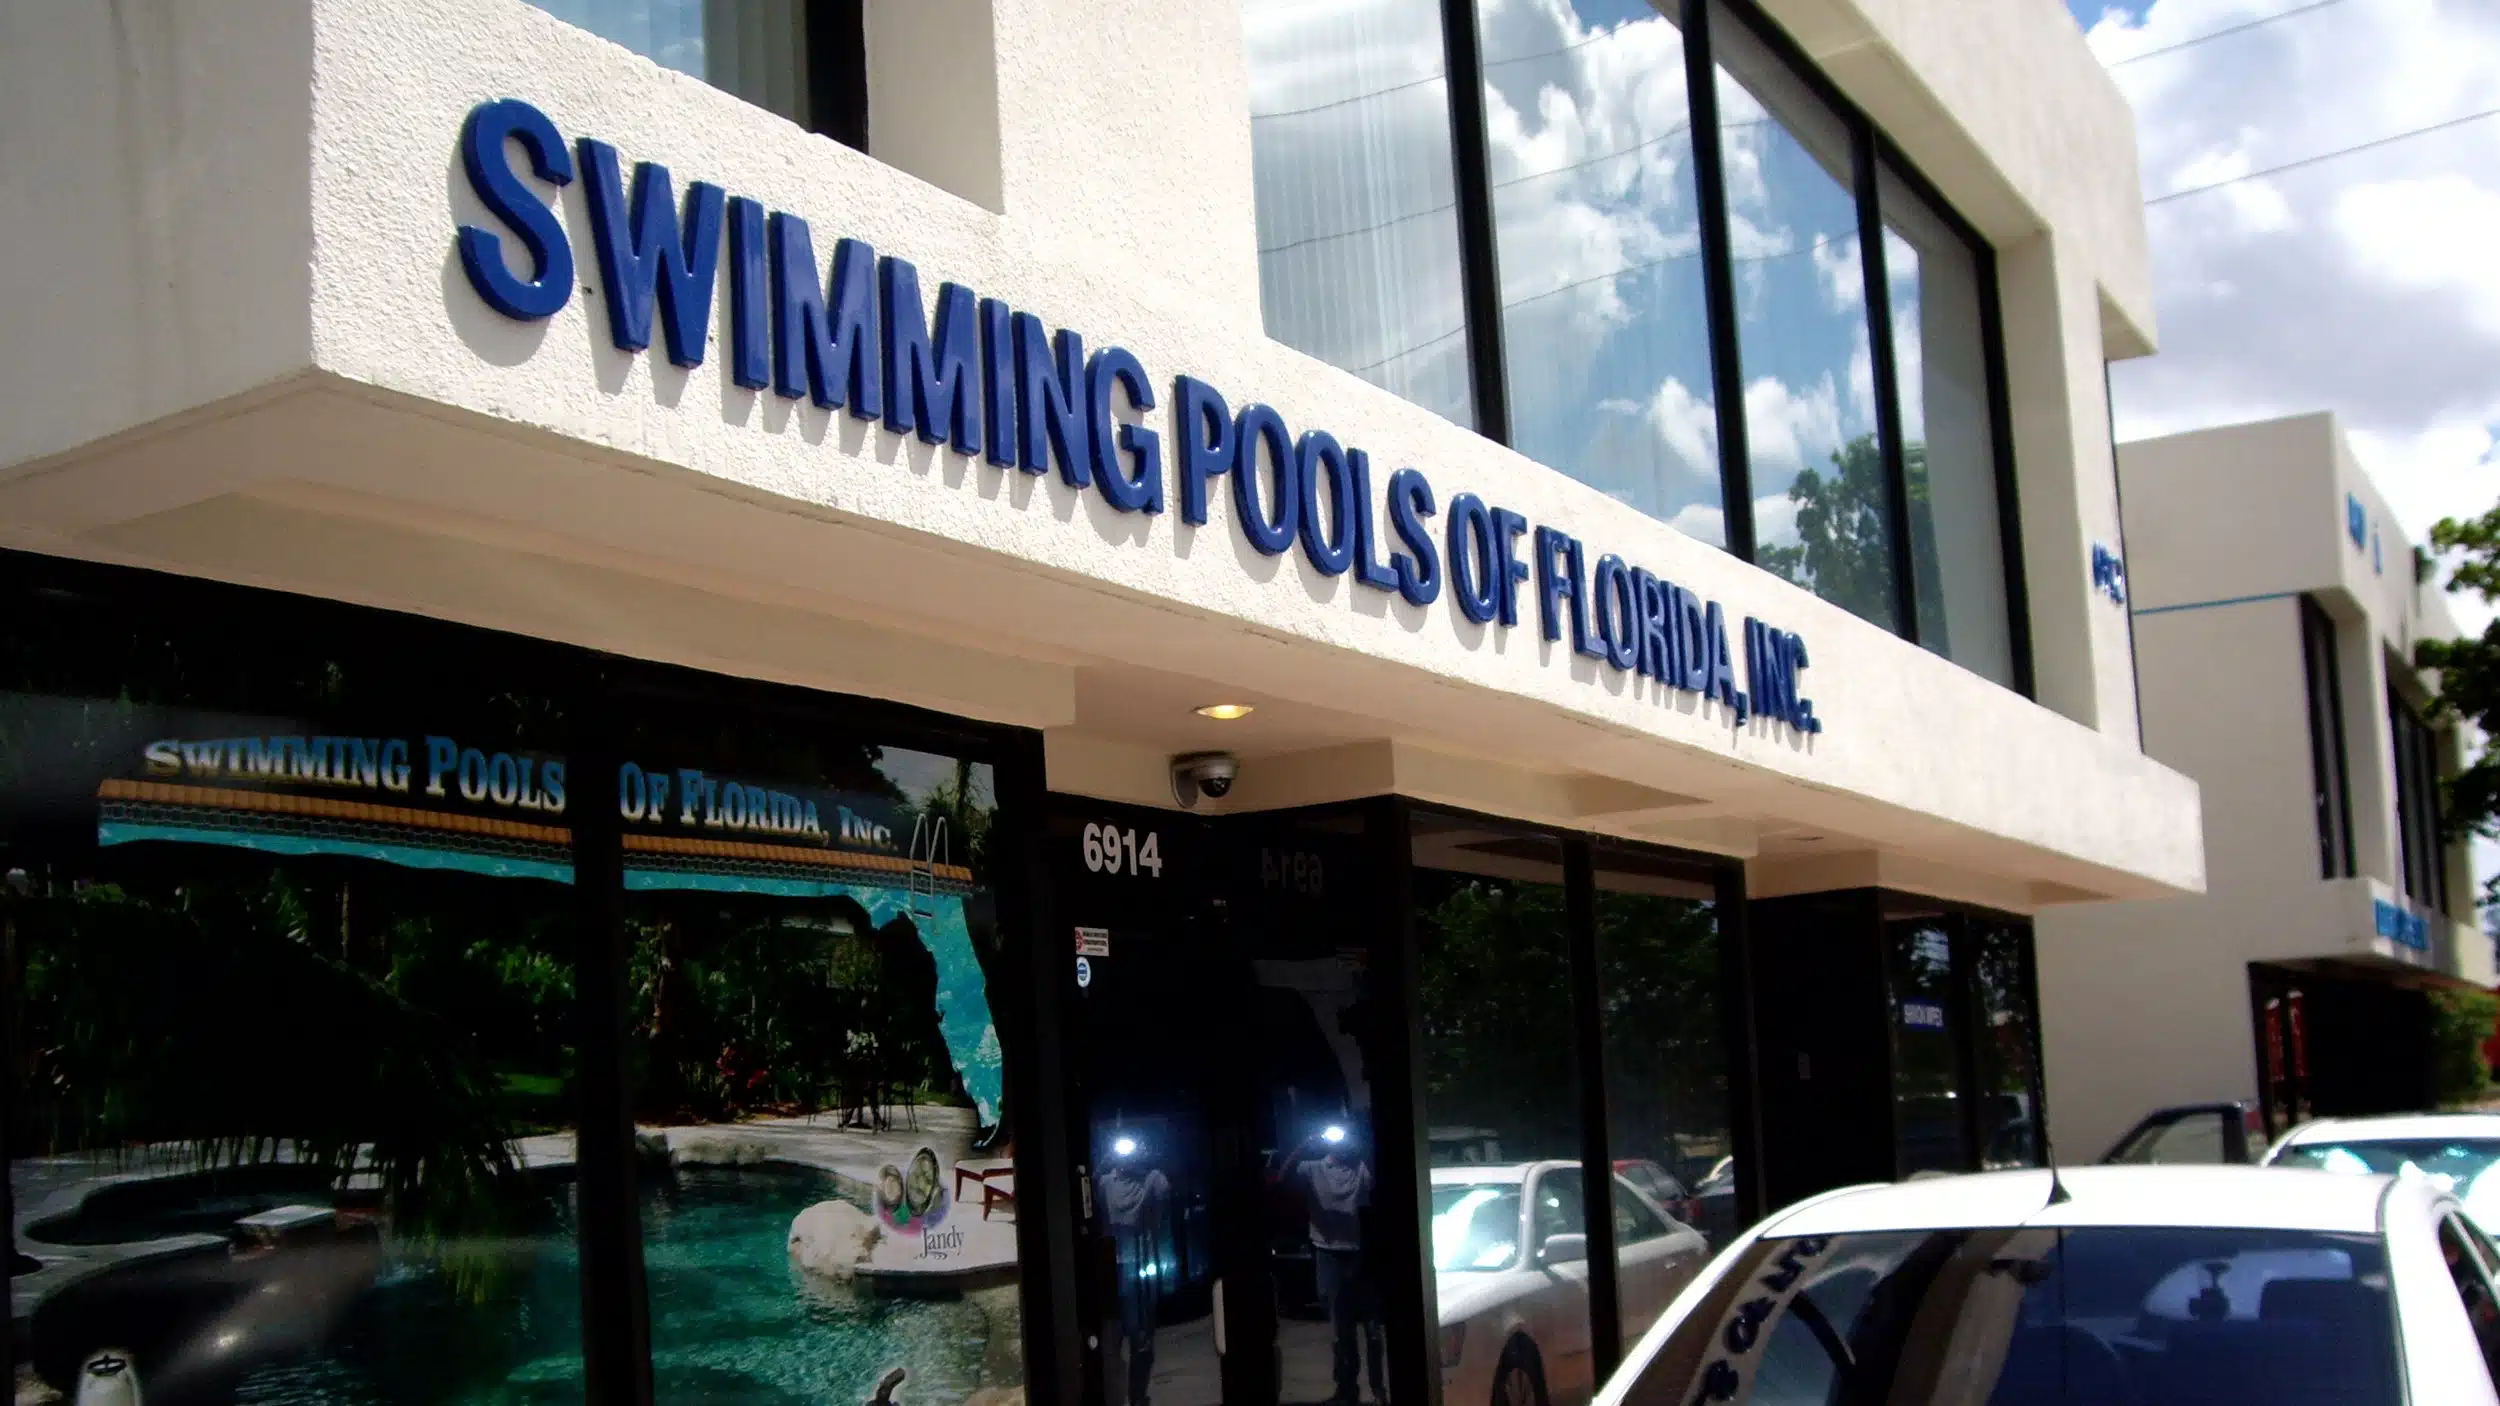 Showroom of Swimming Pools of Florida